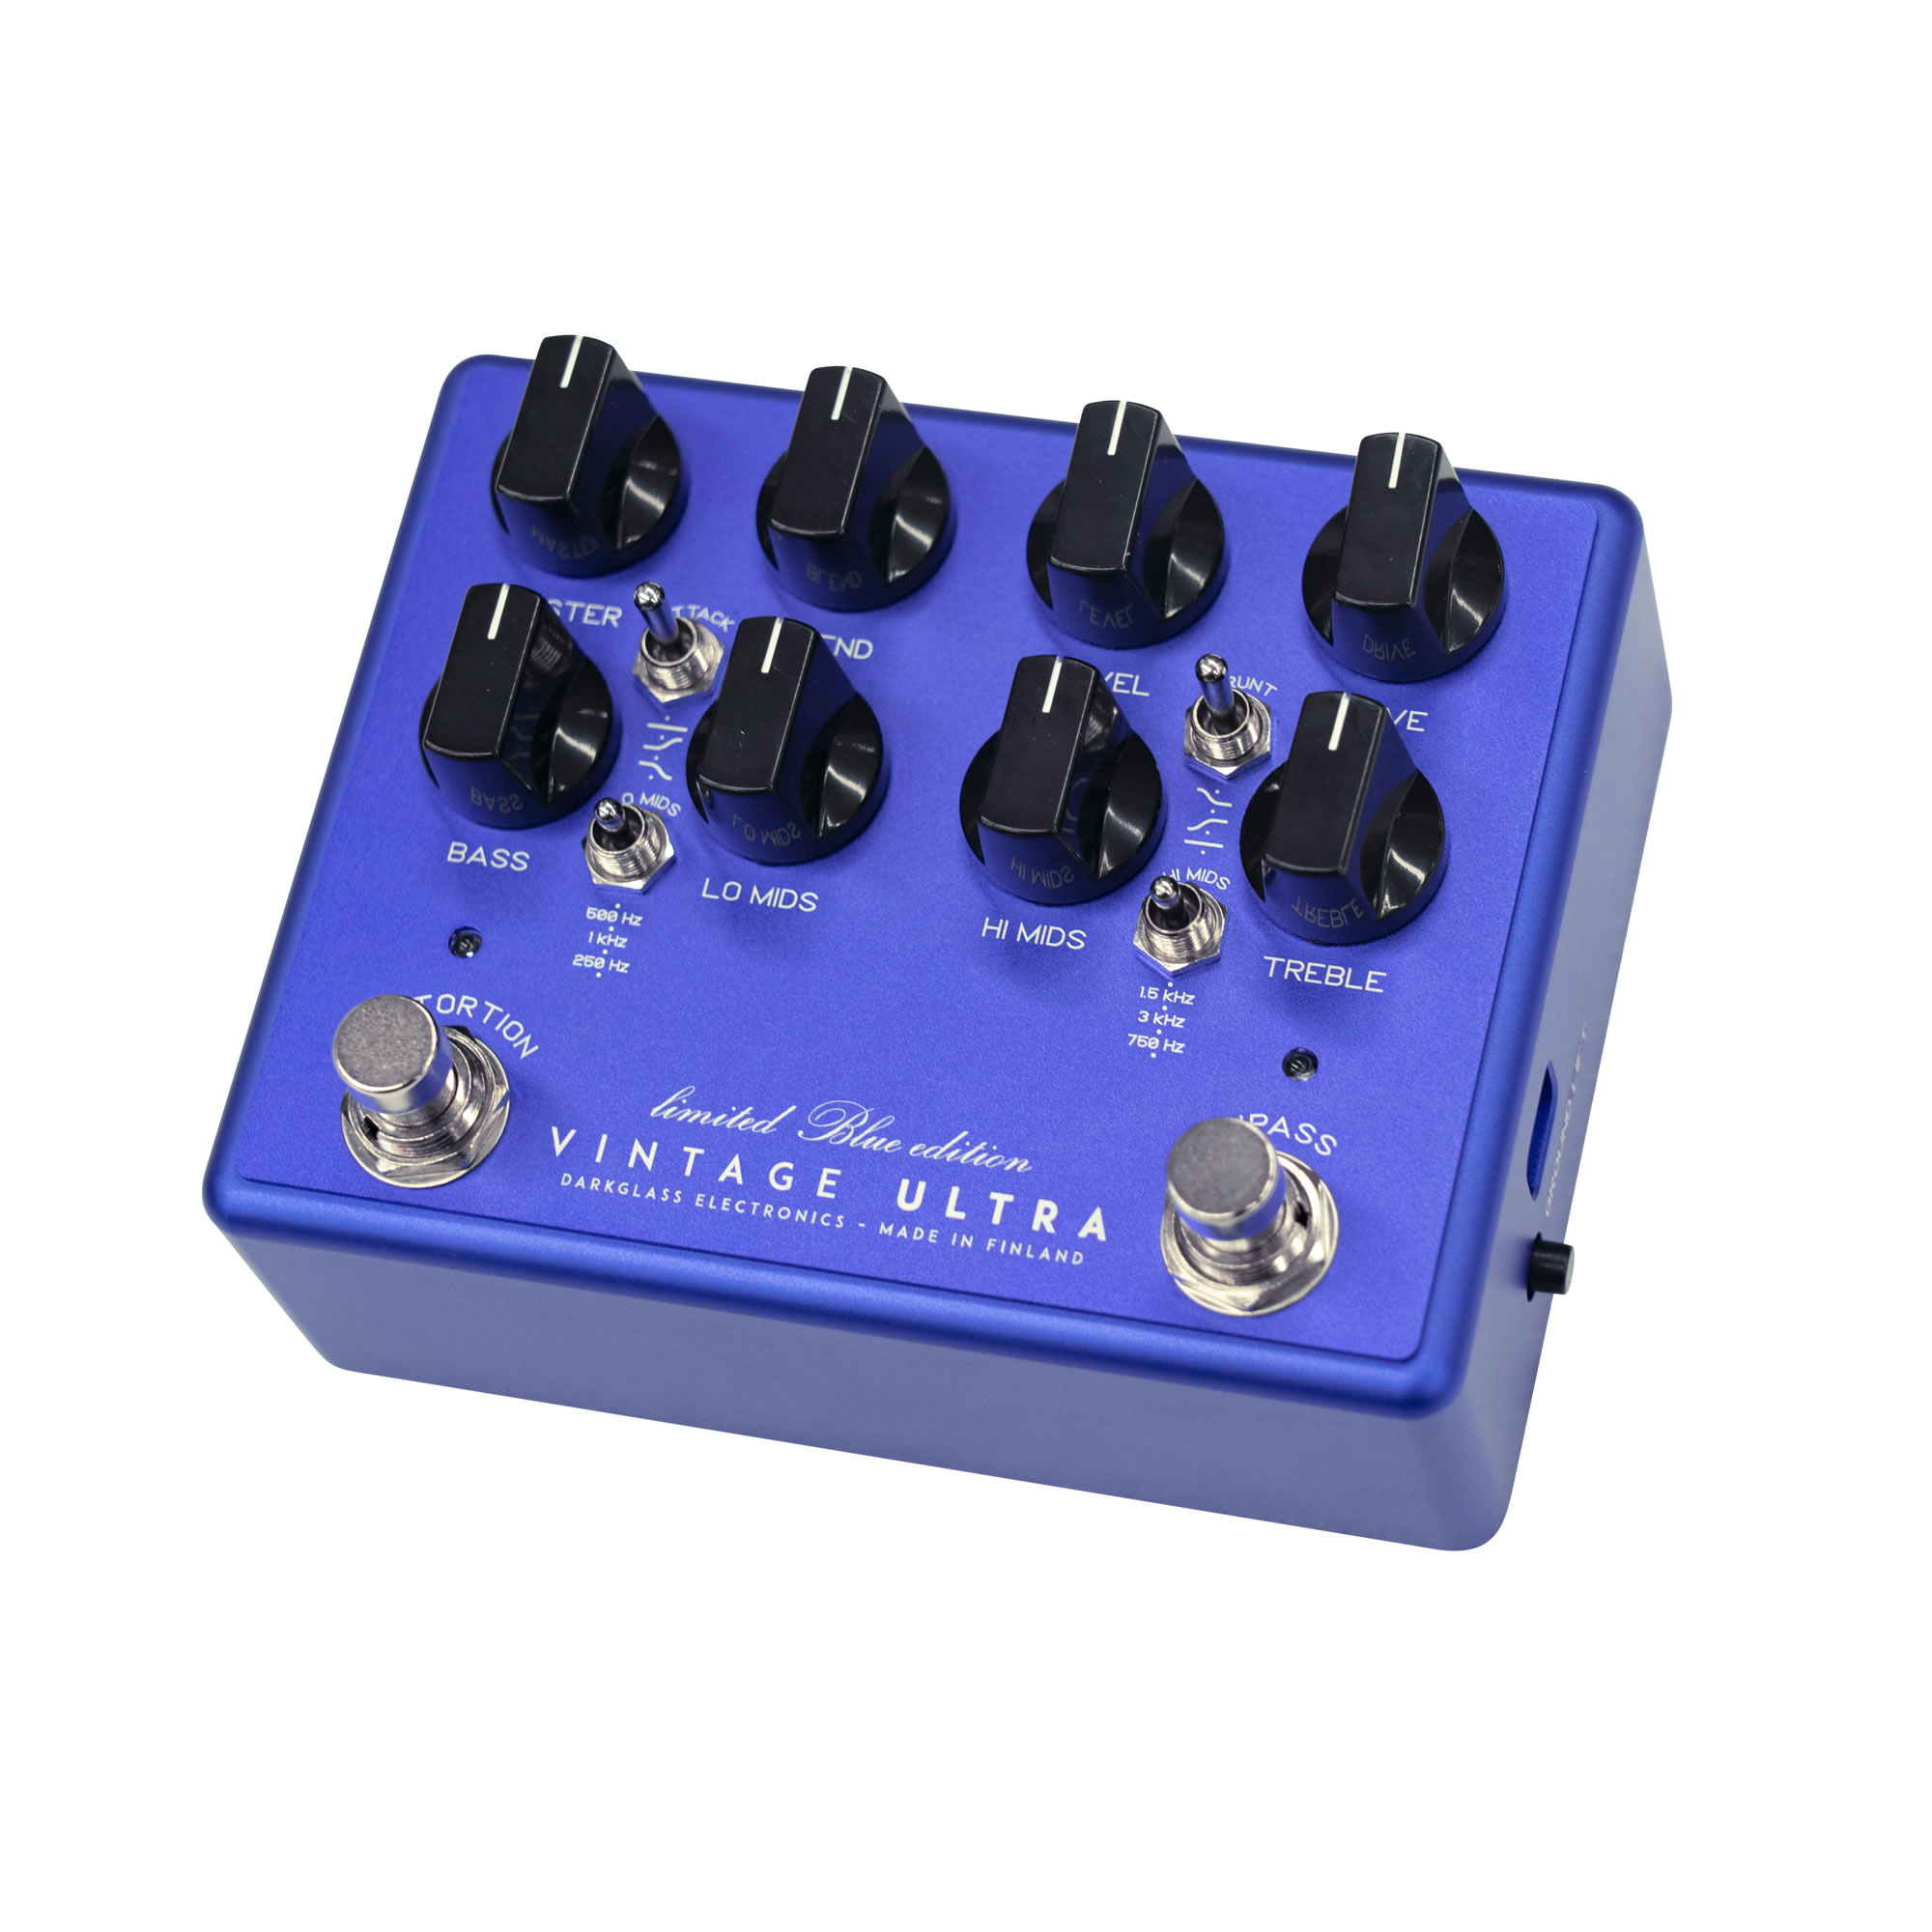 Darkglass Electronics VINTAGE ULTRA v2 with AUX IN -limited Blue edition-  新品 ベース用プリアンプ[ダークグラスエレクトロニクス][ビンテージウルトラ][ブルー,青][Bass  Preamp][Effector,エフェクター] 